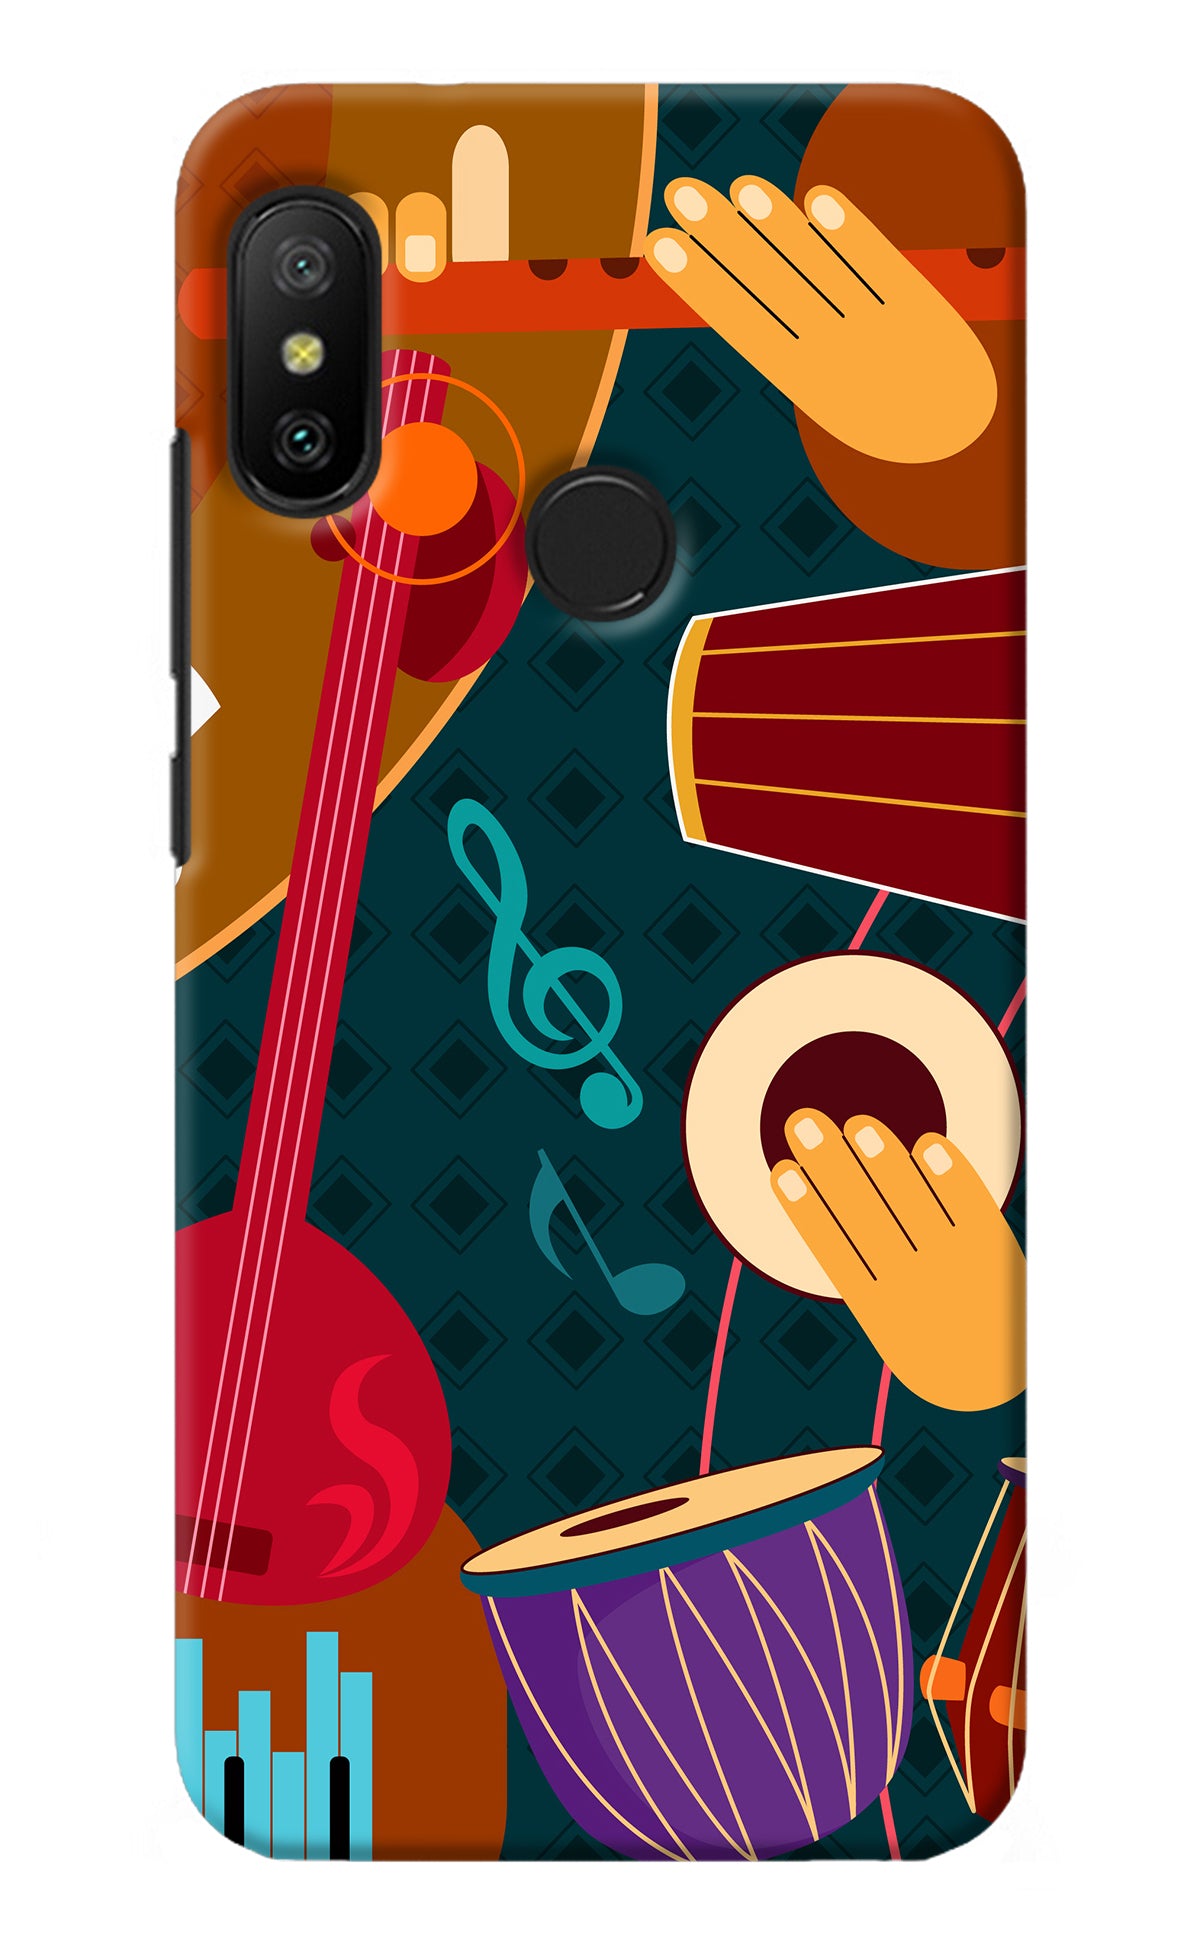 Music Instrument Redmi 6 Pro Back Cover